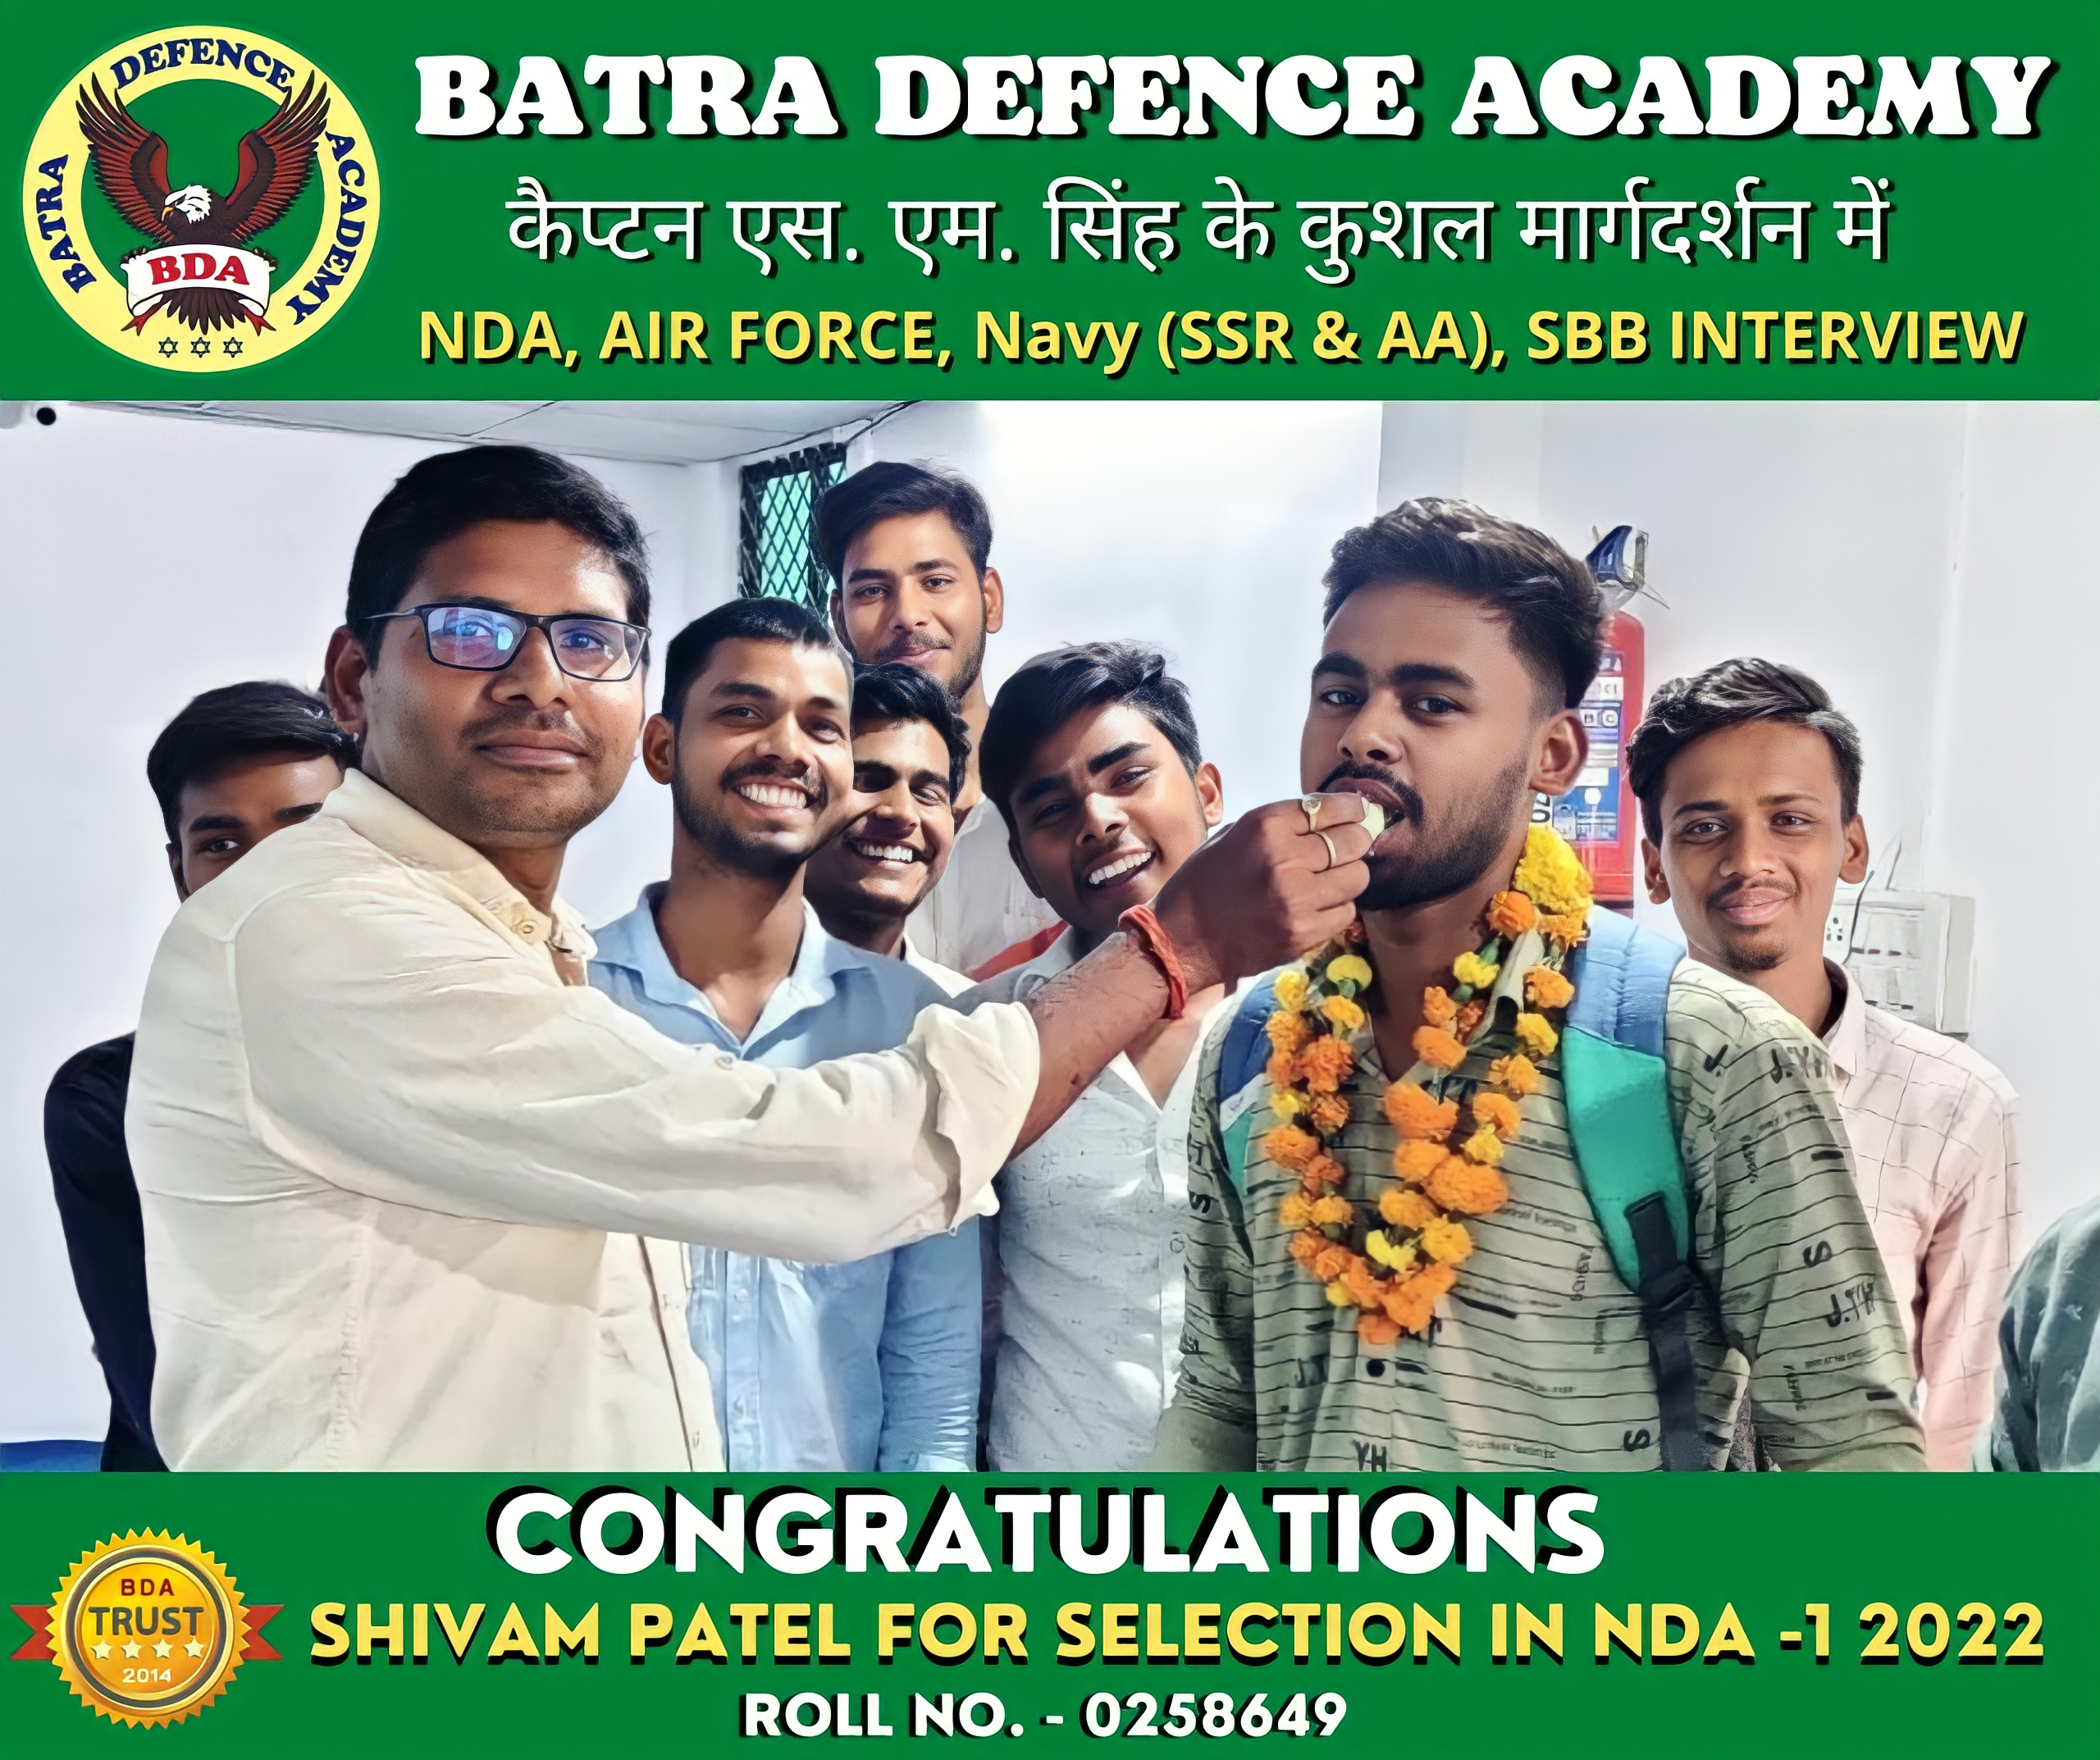 Batra defence academy result of NDA - I 2022